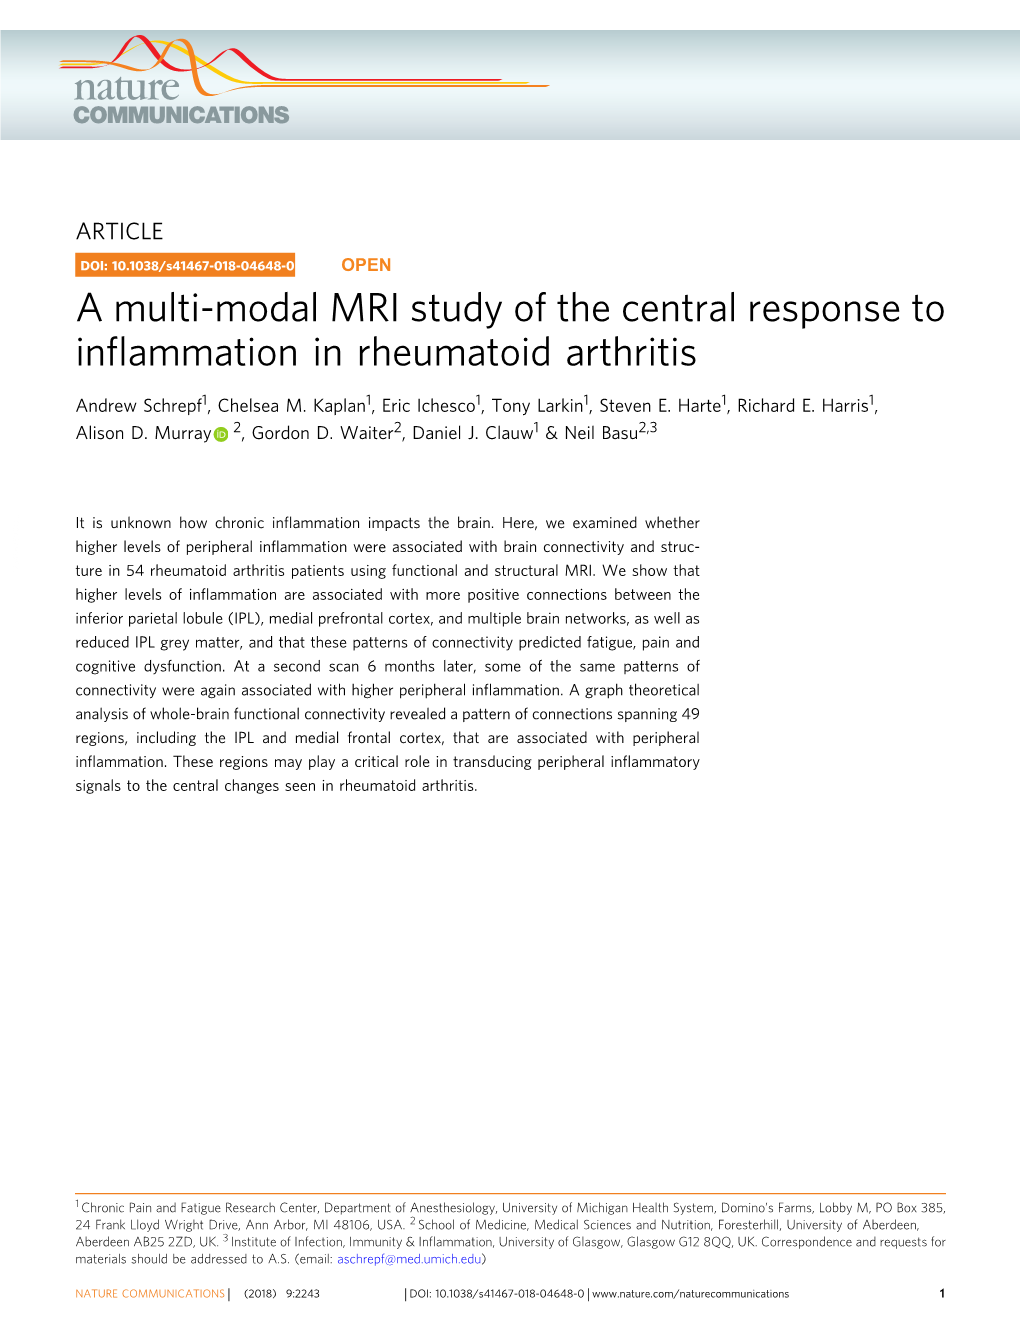 A Multi-Modal MRI Study of the Central Response to Inflammation in Rheumatoid Arthritis